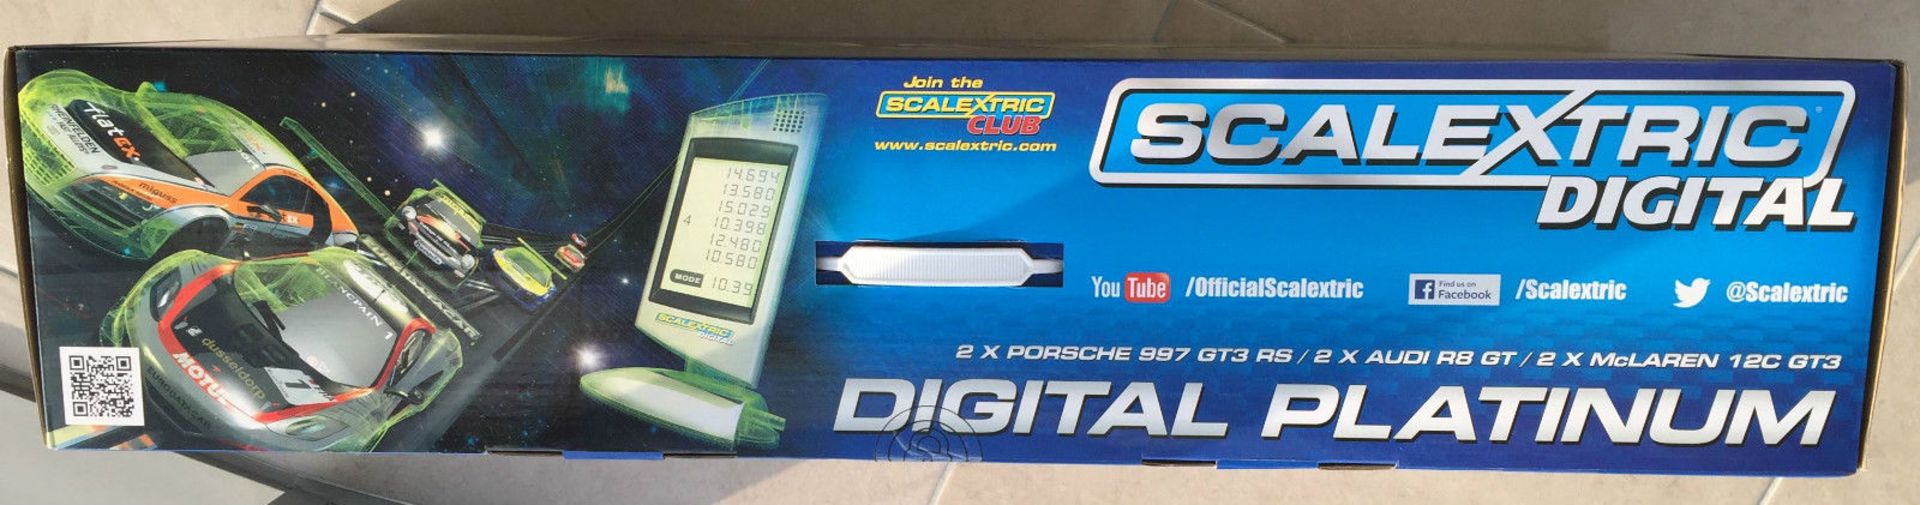 Scalextric Digital Platinum
1:32 Scale
6 cars included
New unused unopened - Image 7 of 9